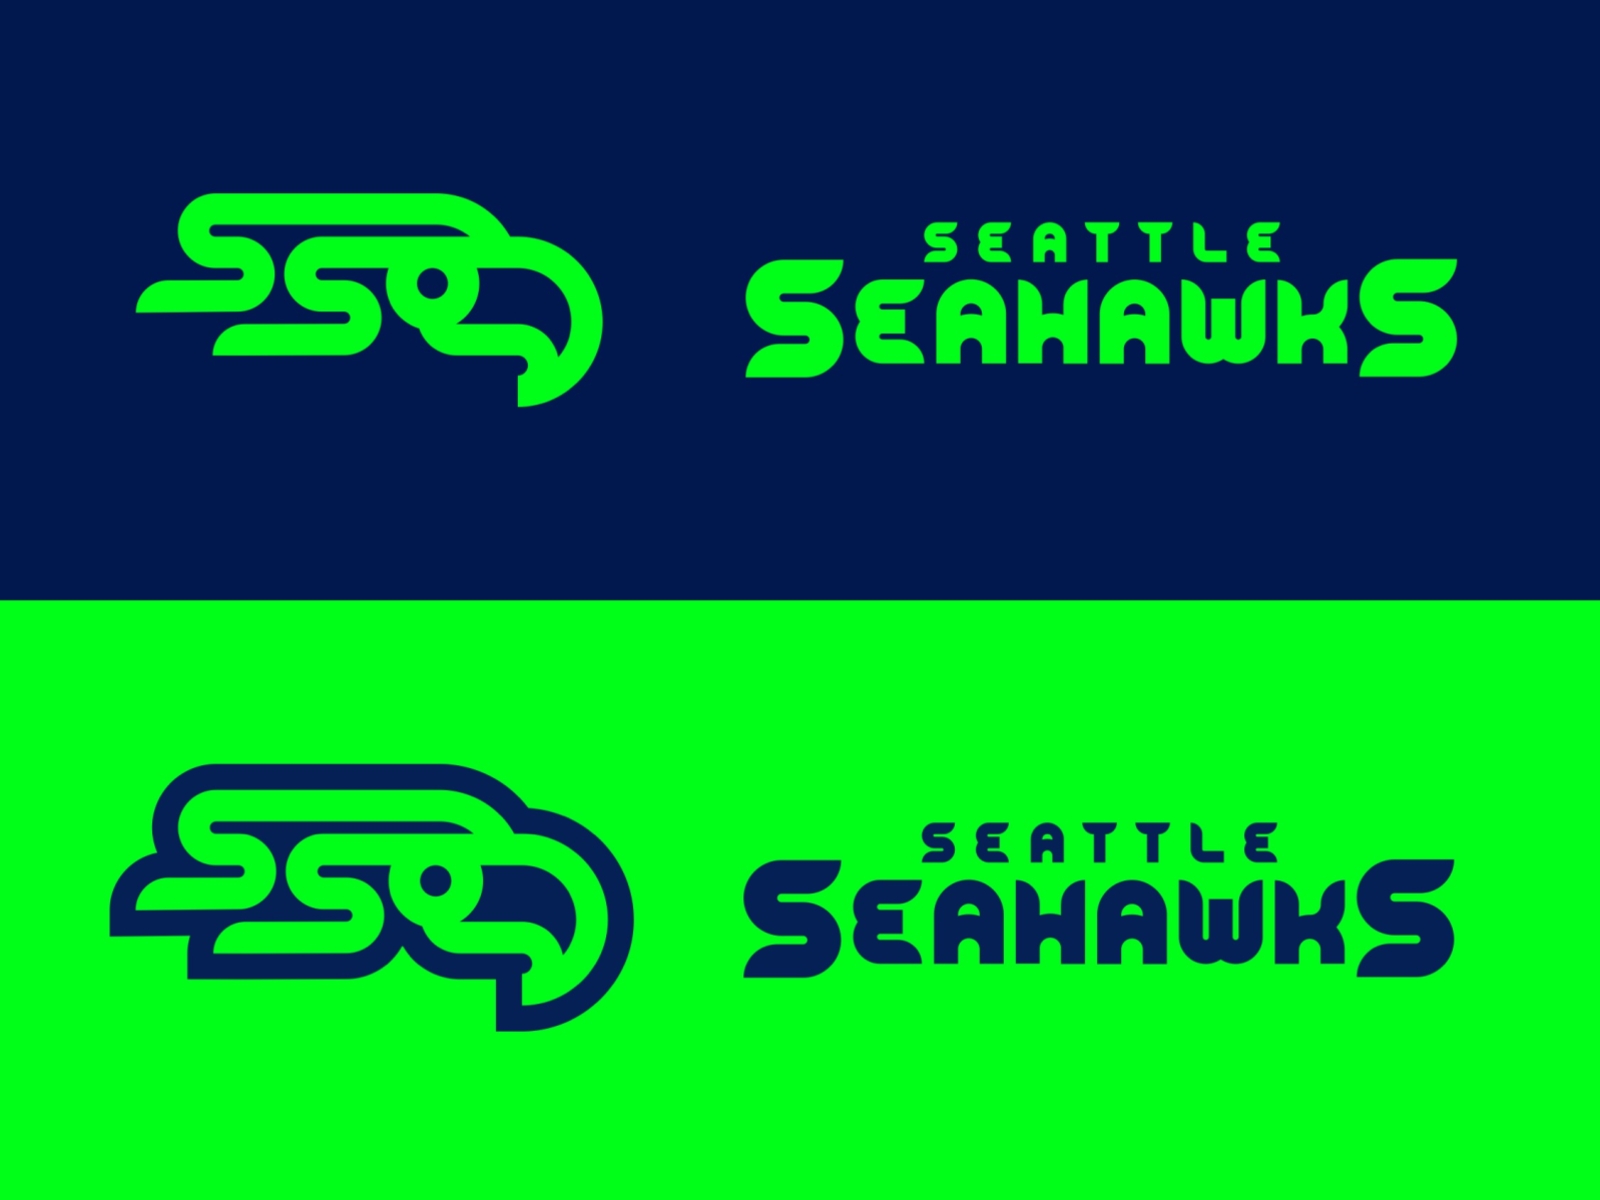 seahawks wordmark